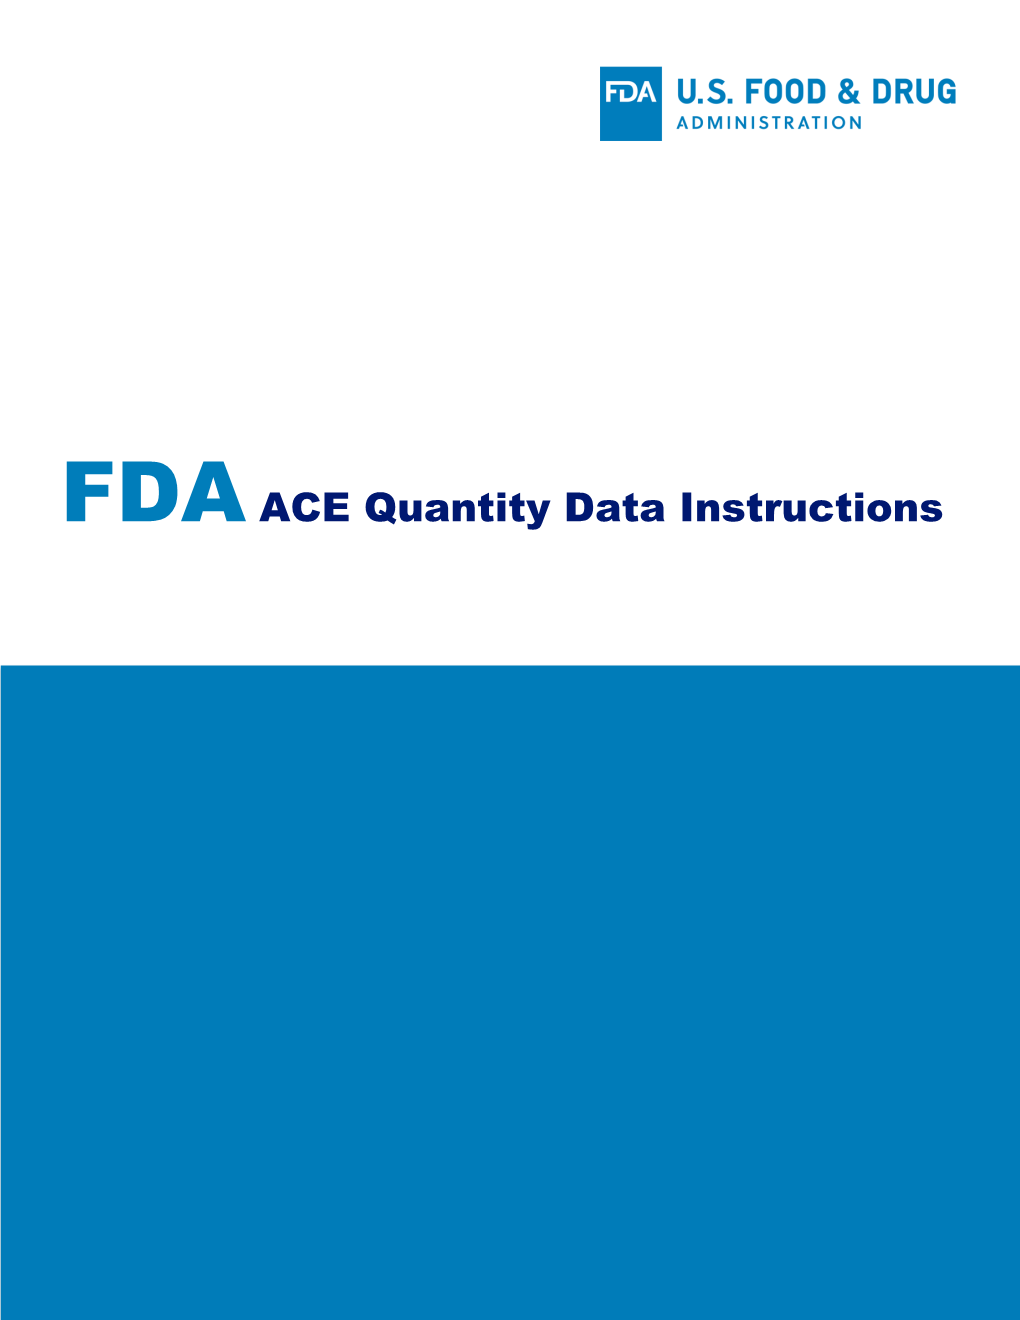 20180425 FDA ACE Quantity Data Instructions